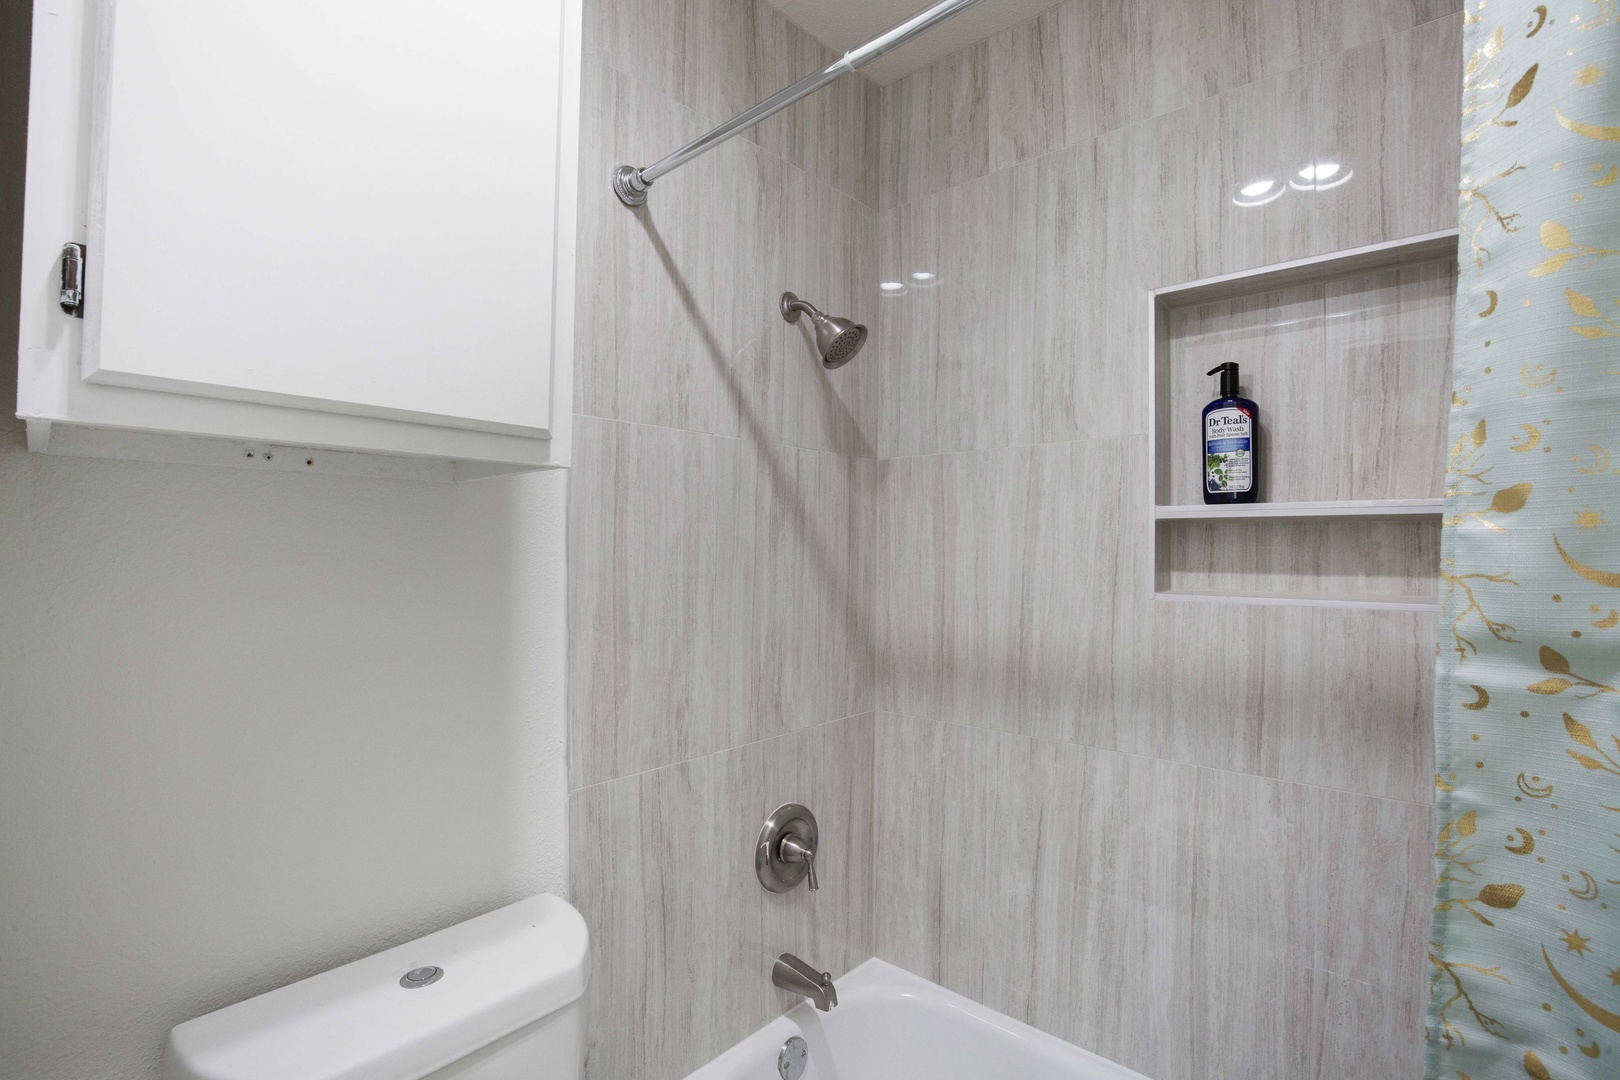 En-suite bathroom with shower/tub combo